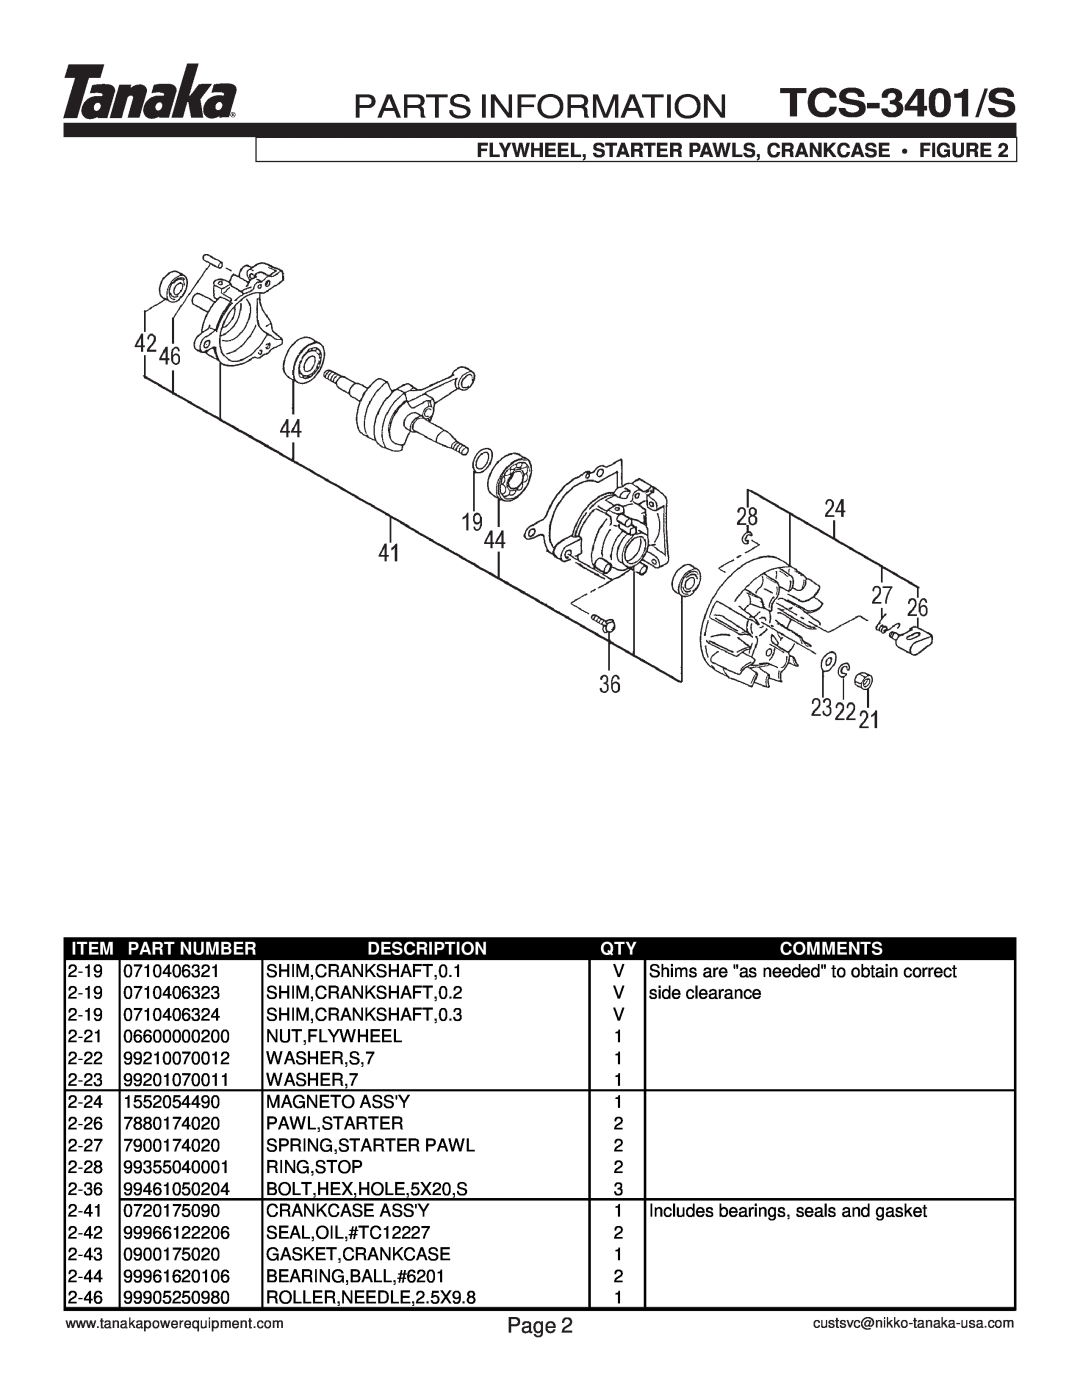 Tanaka manual Flywheel, Starter Pawls, Crankcase Figure, PARTS INFORMATION TCS-3401/S, Page, Part Number, Description 